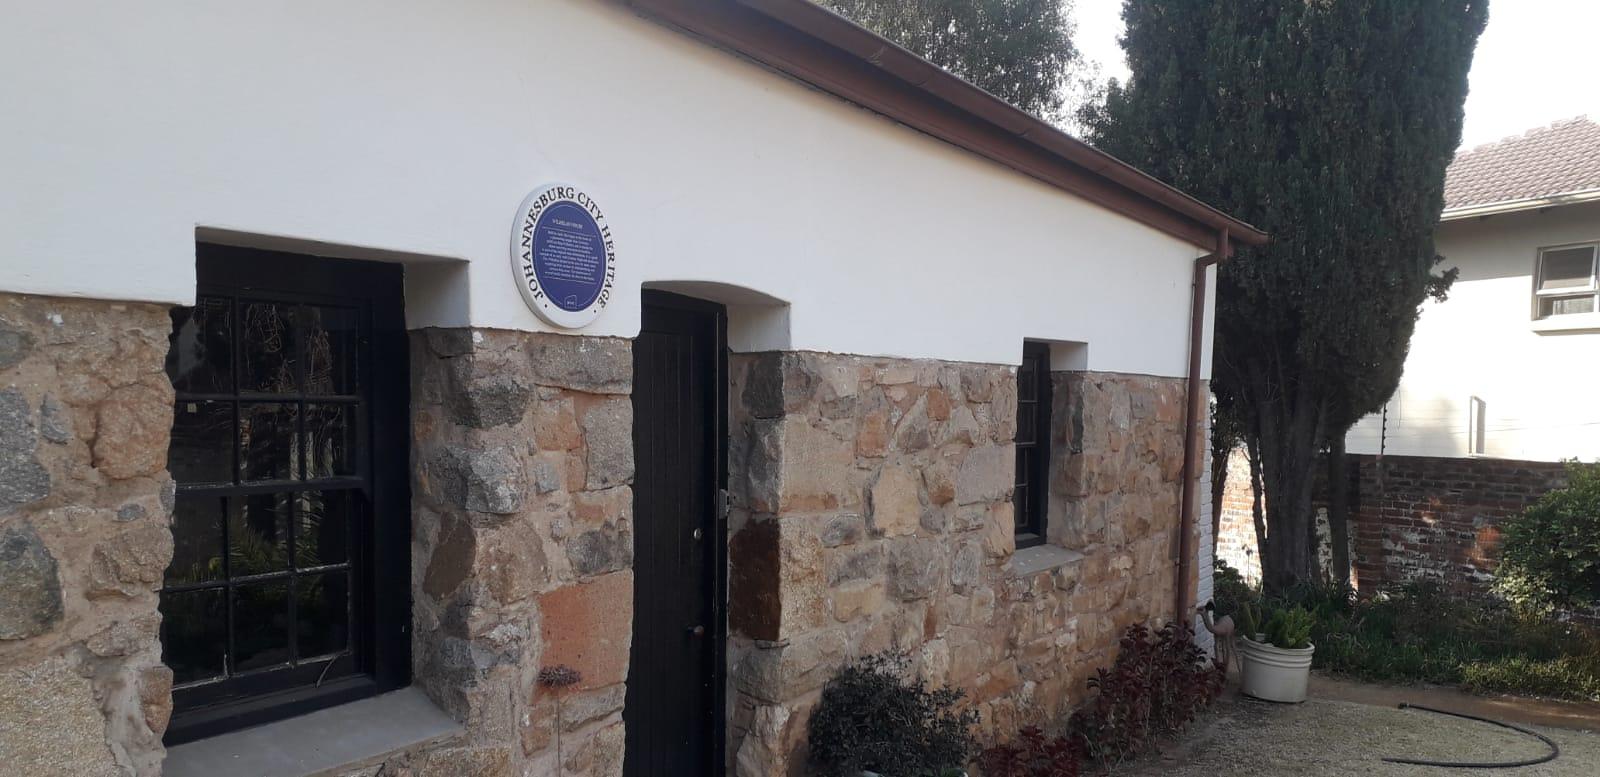 Driefontein Farmhouse with plaque - Eric Itzkin - 2020